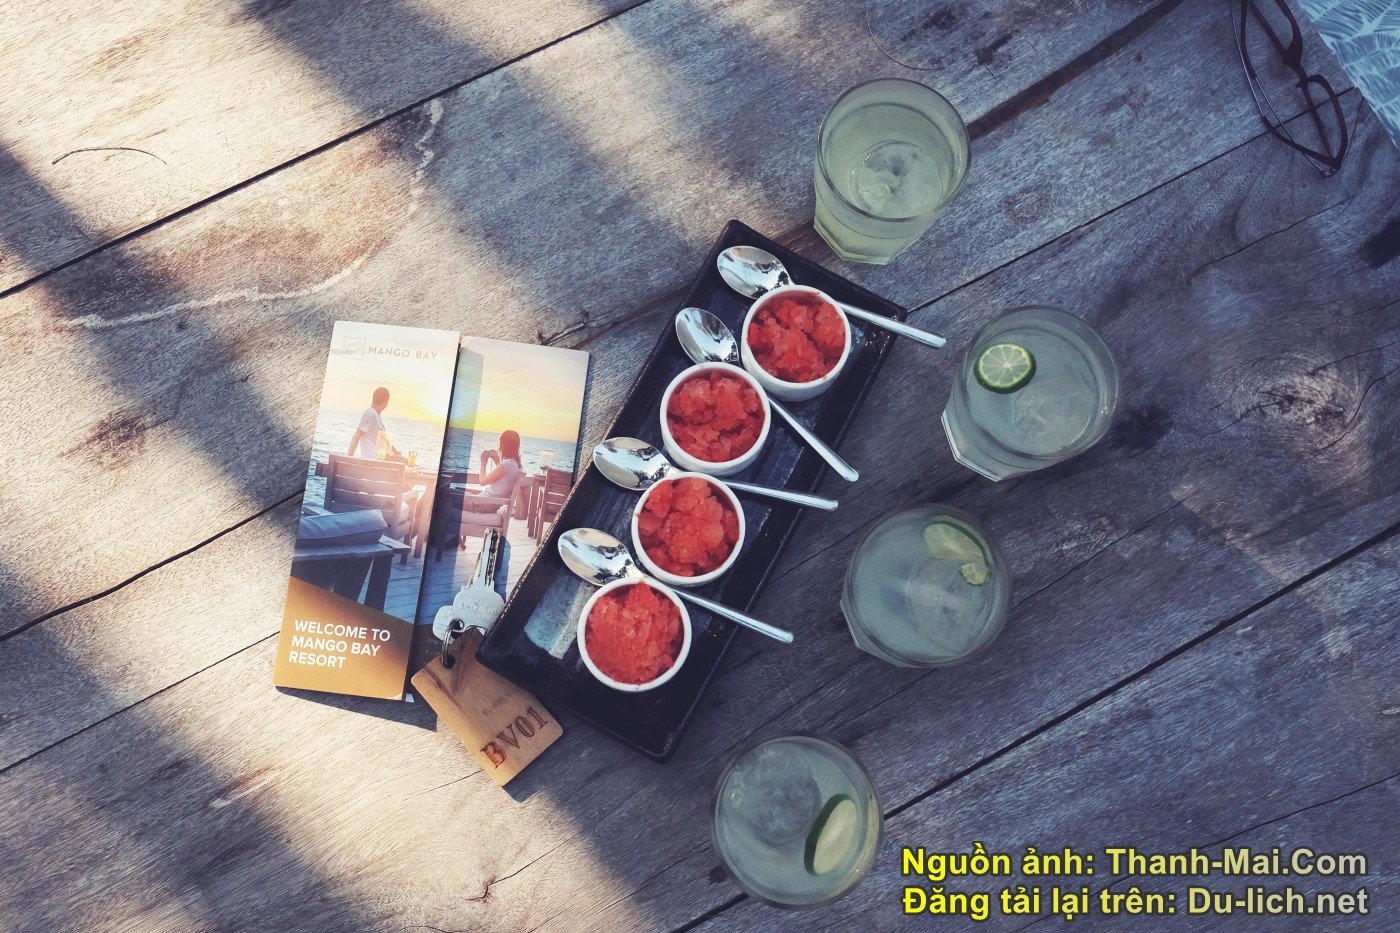 Wellcome drink khi check-in Mango Bay Phú Quốc